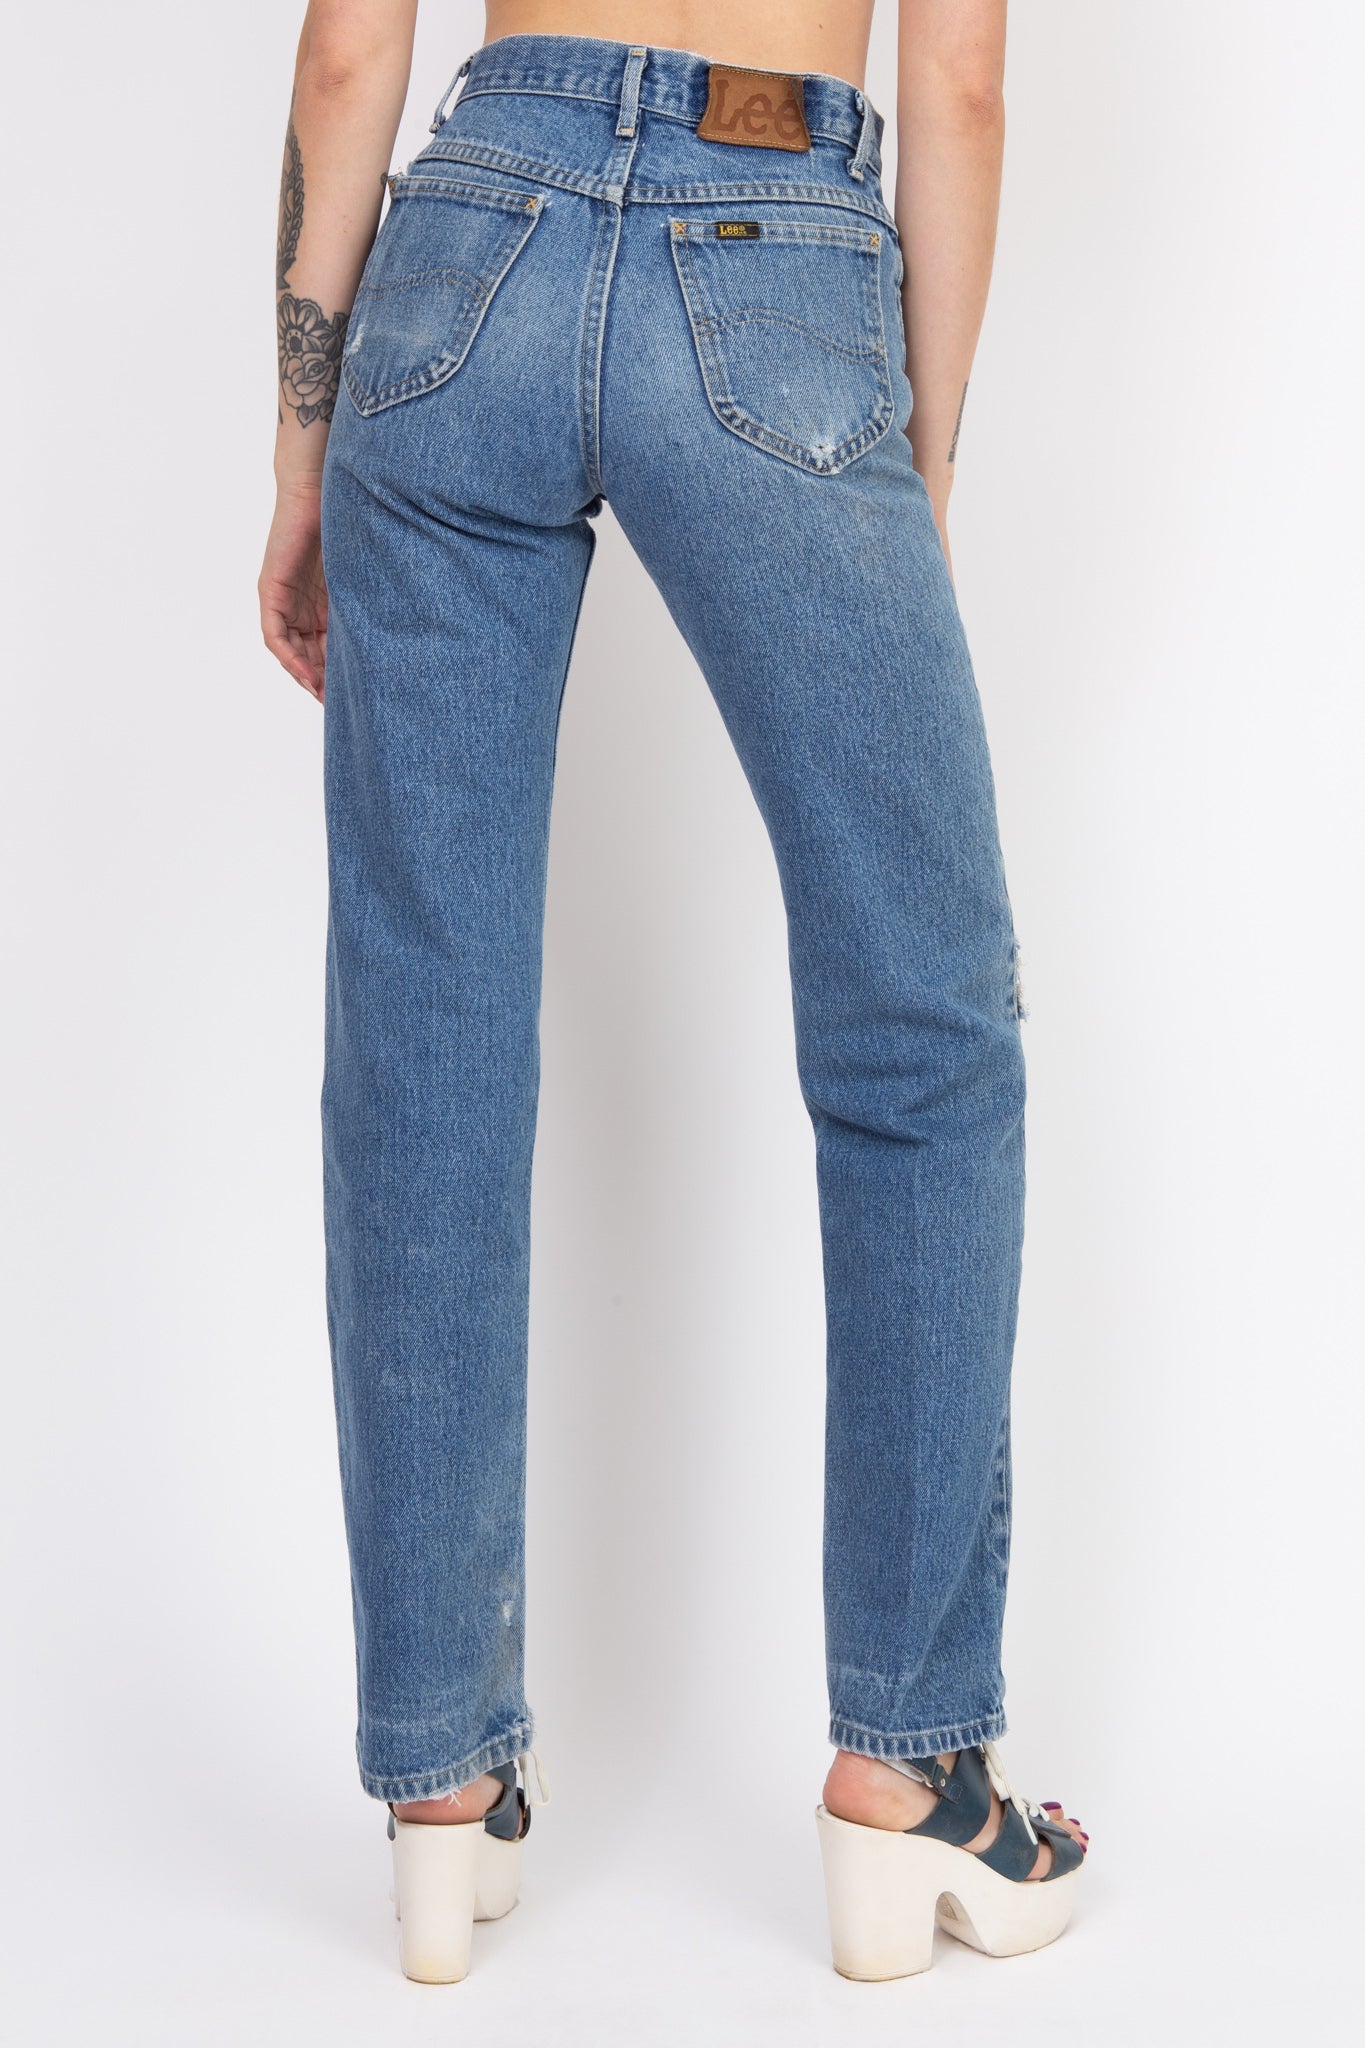 Lee Distressed Jeans